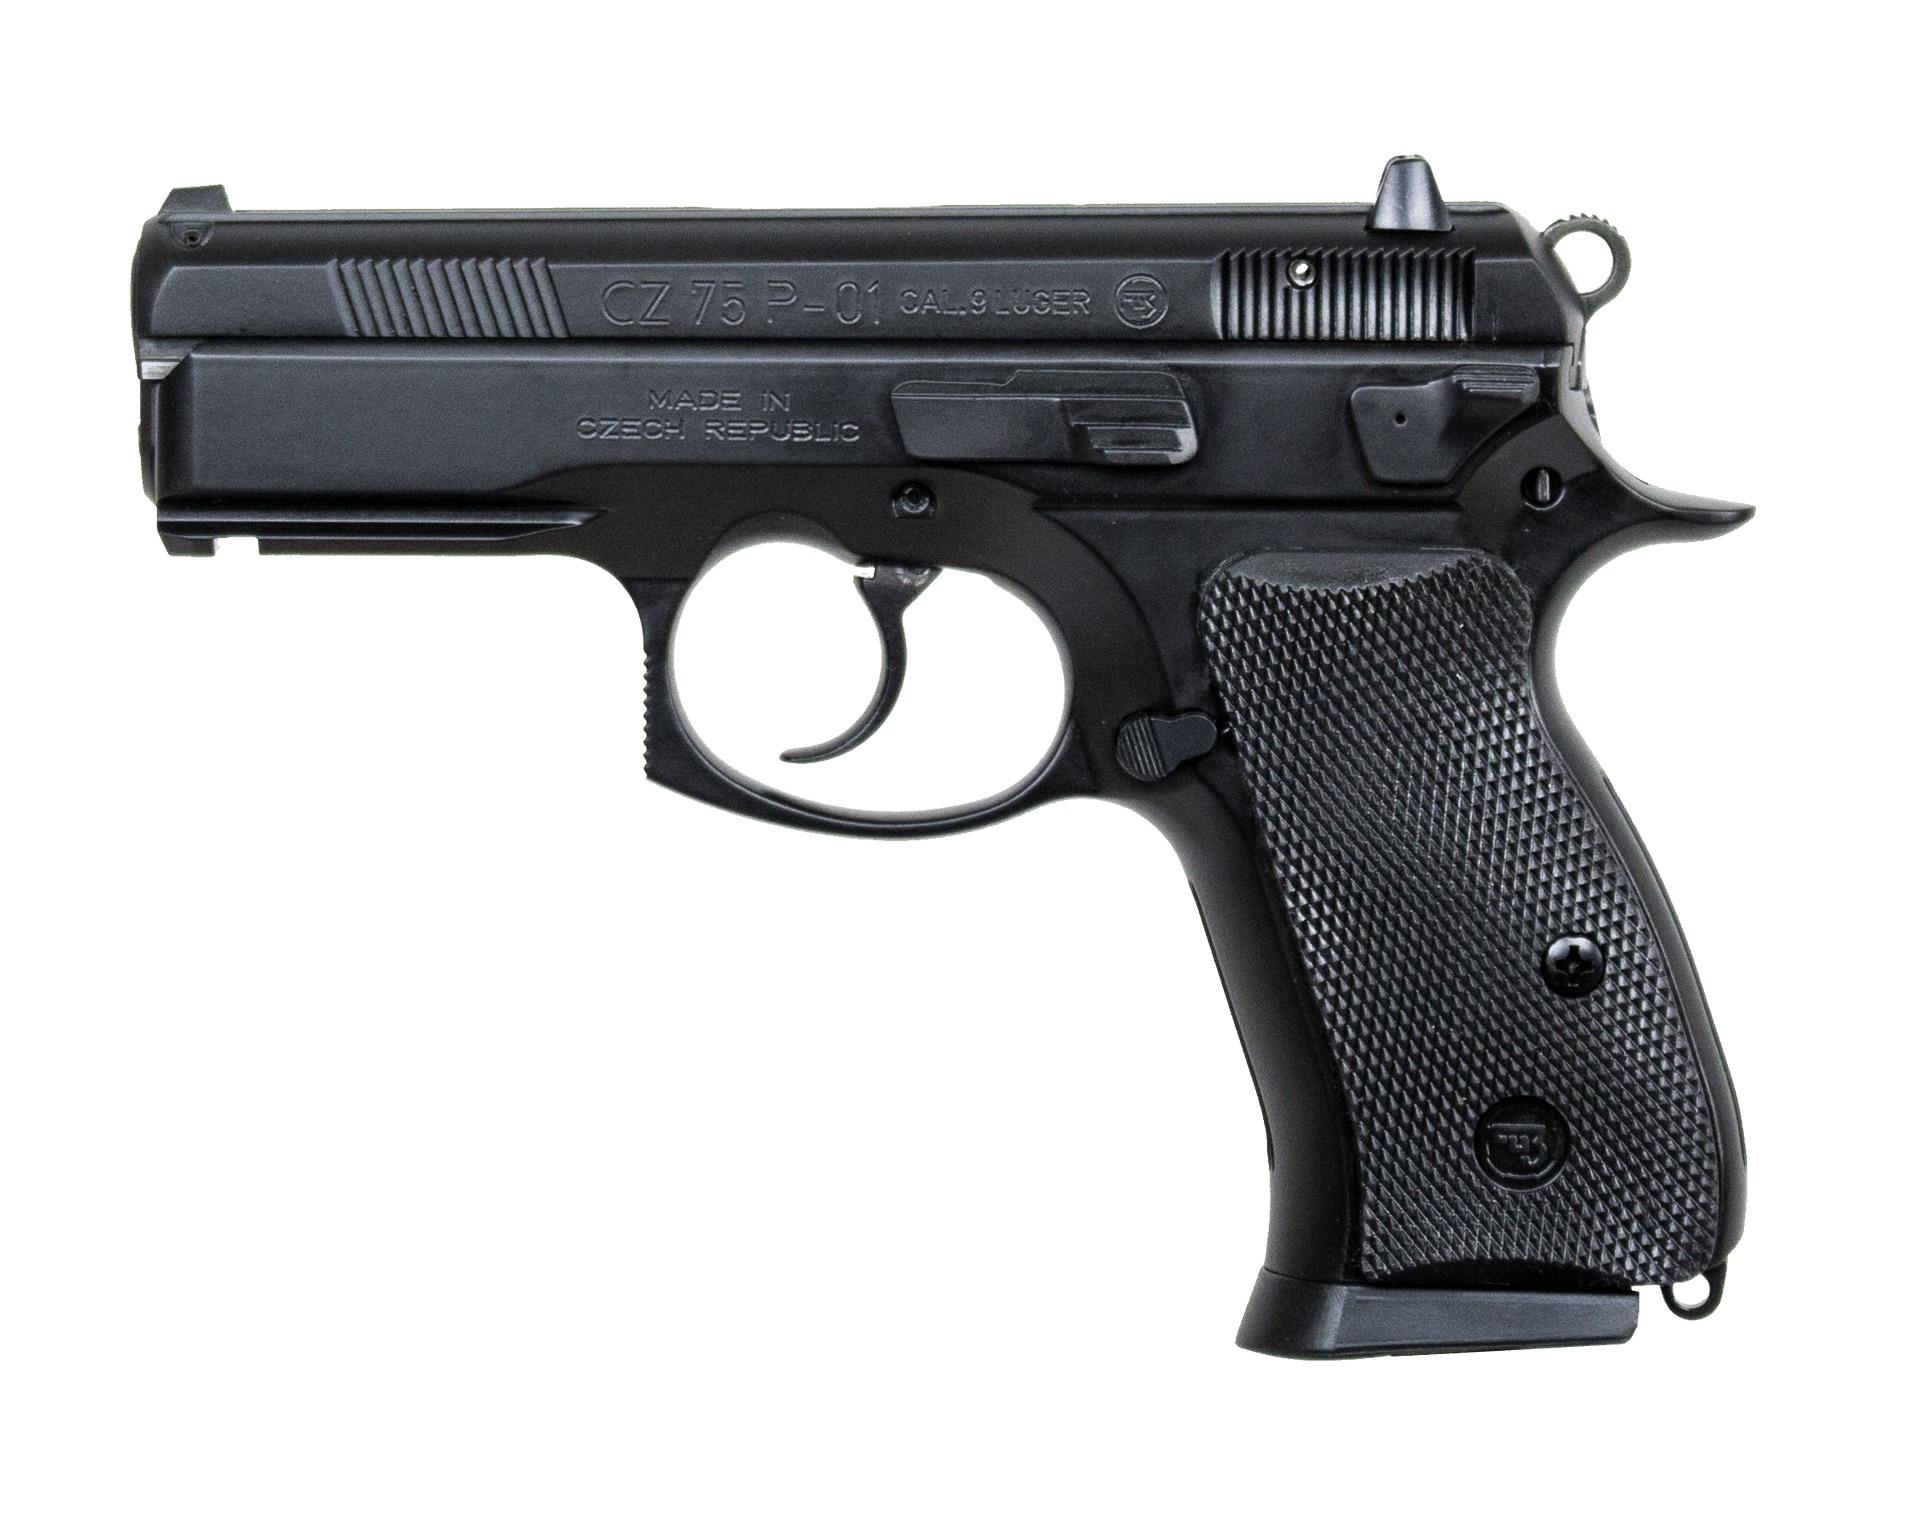  Cz P- 01 9mm